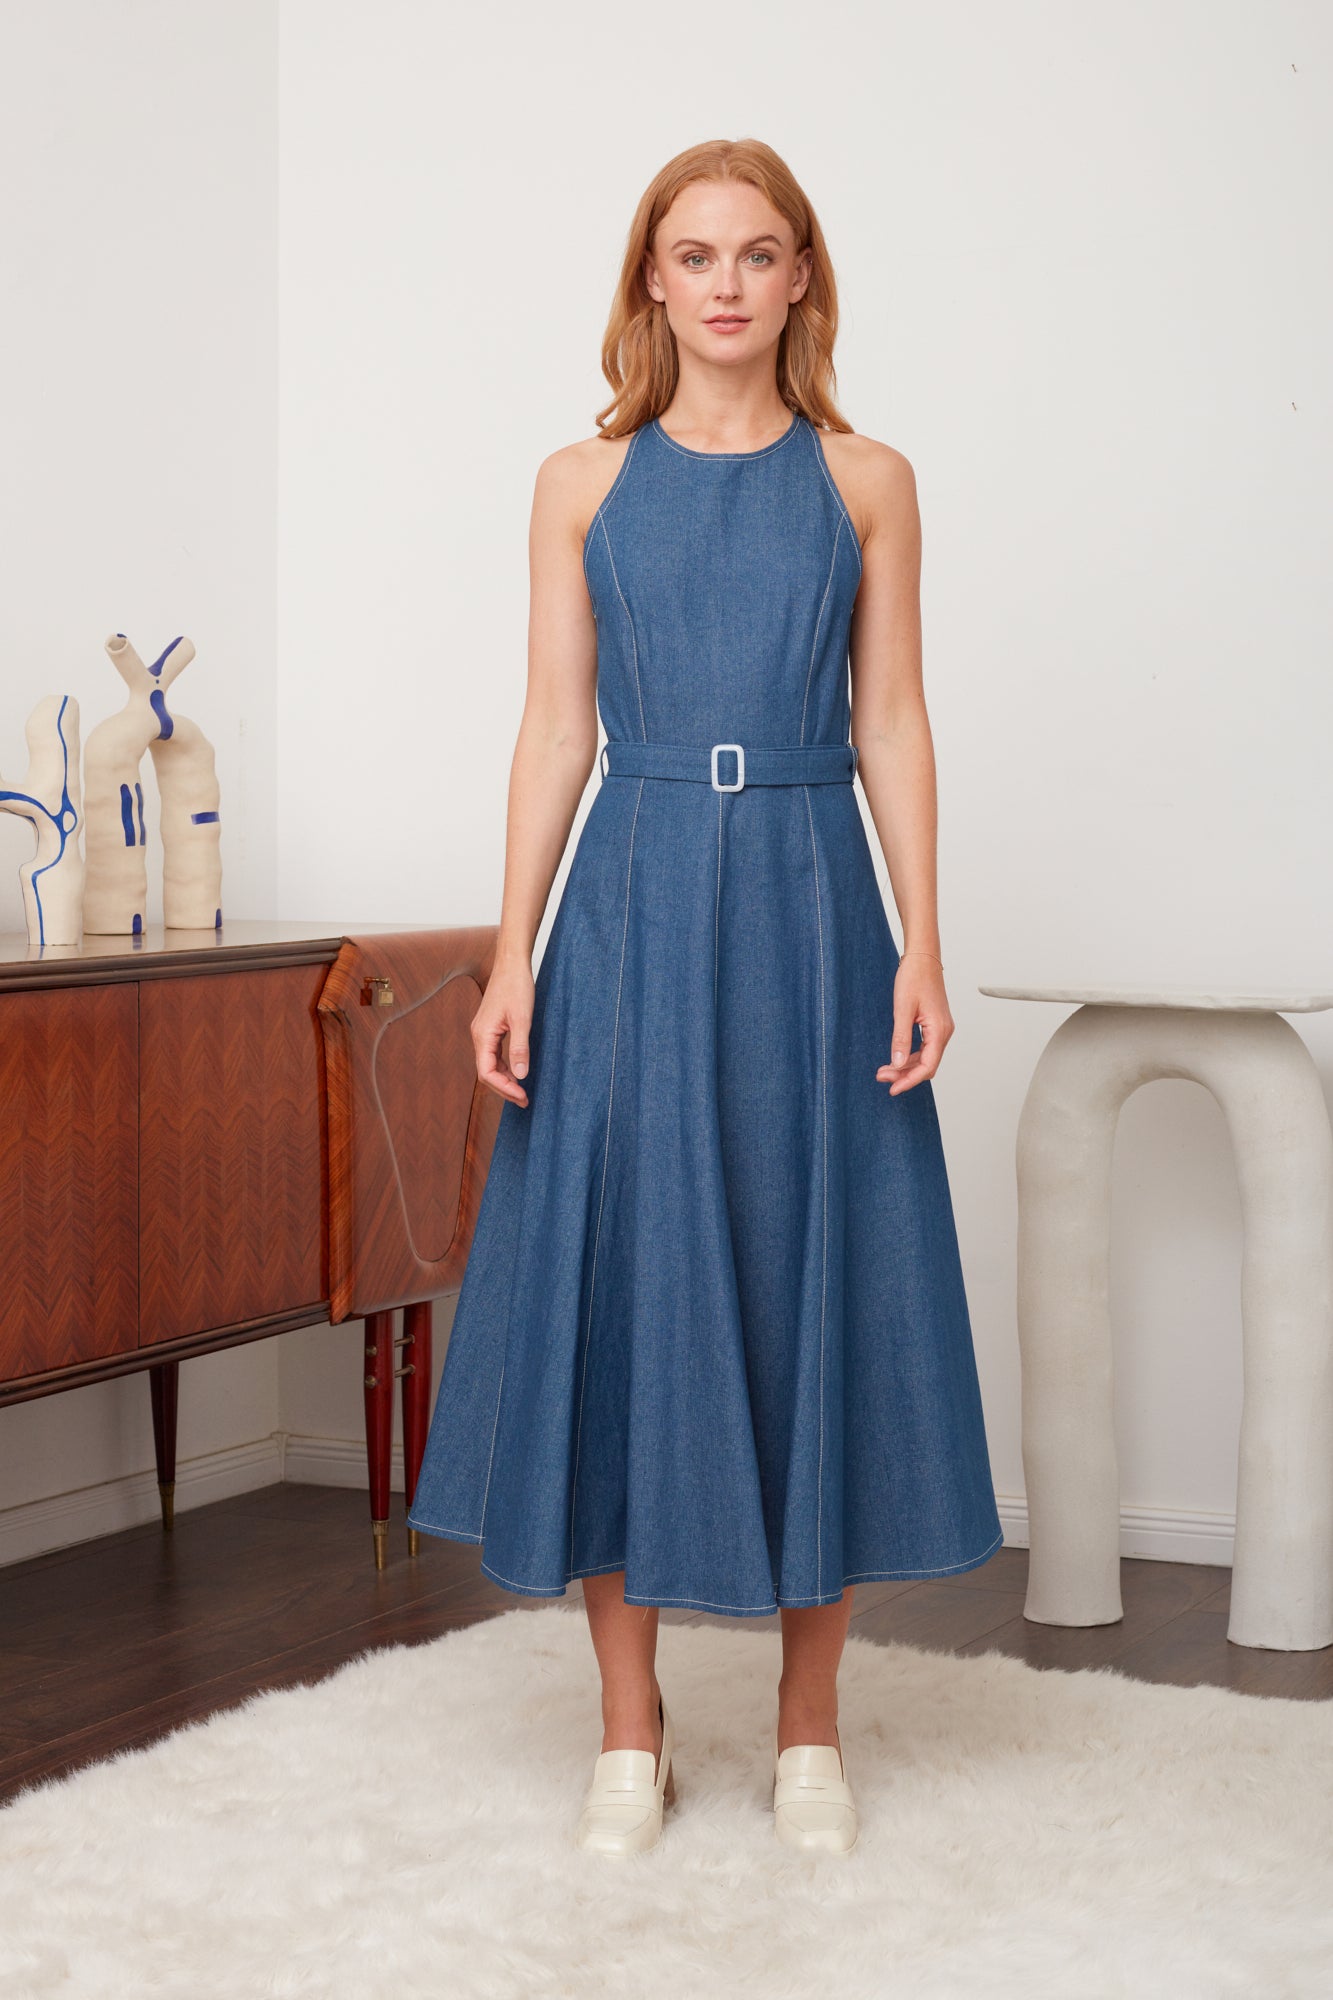 ODE Classy Blue Denim Midi Dress - Flattering A-line Silhouette